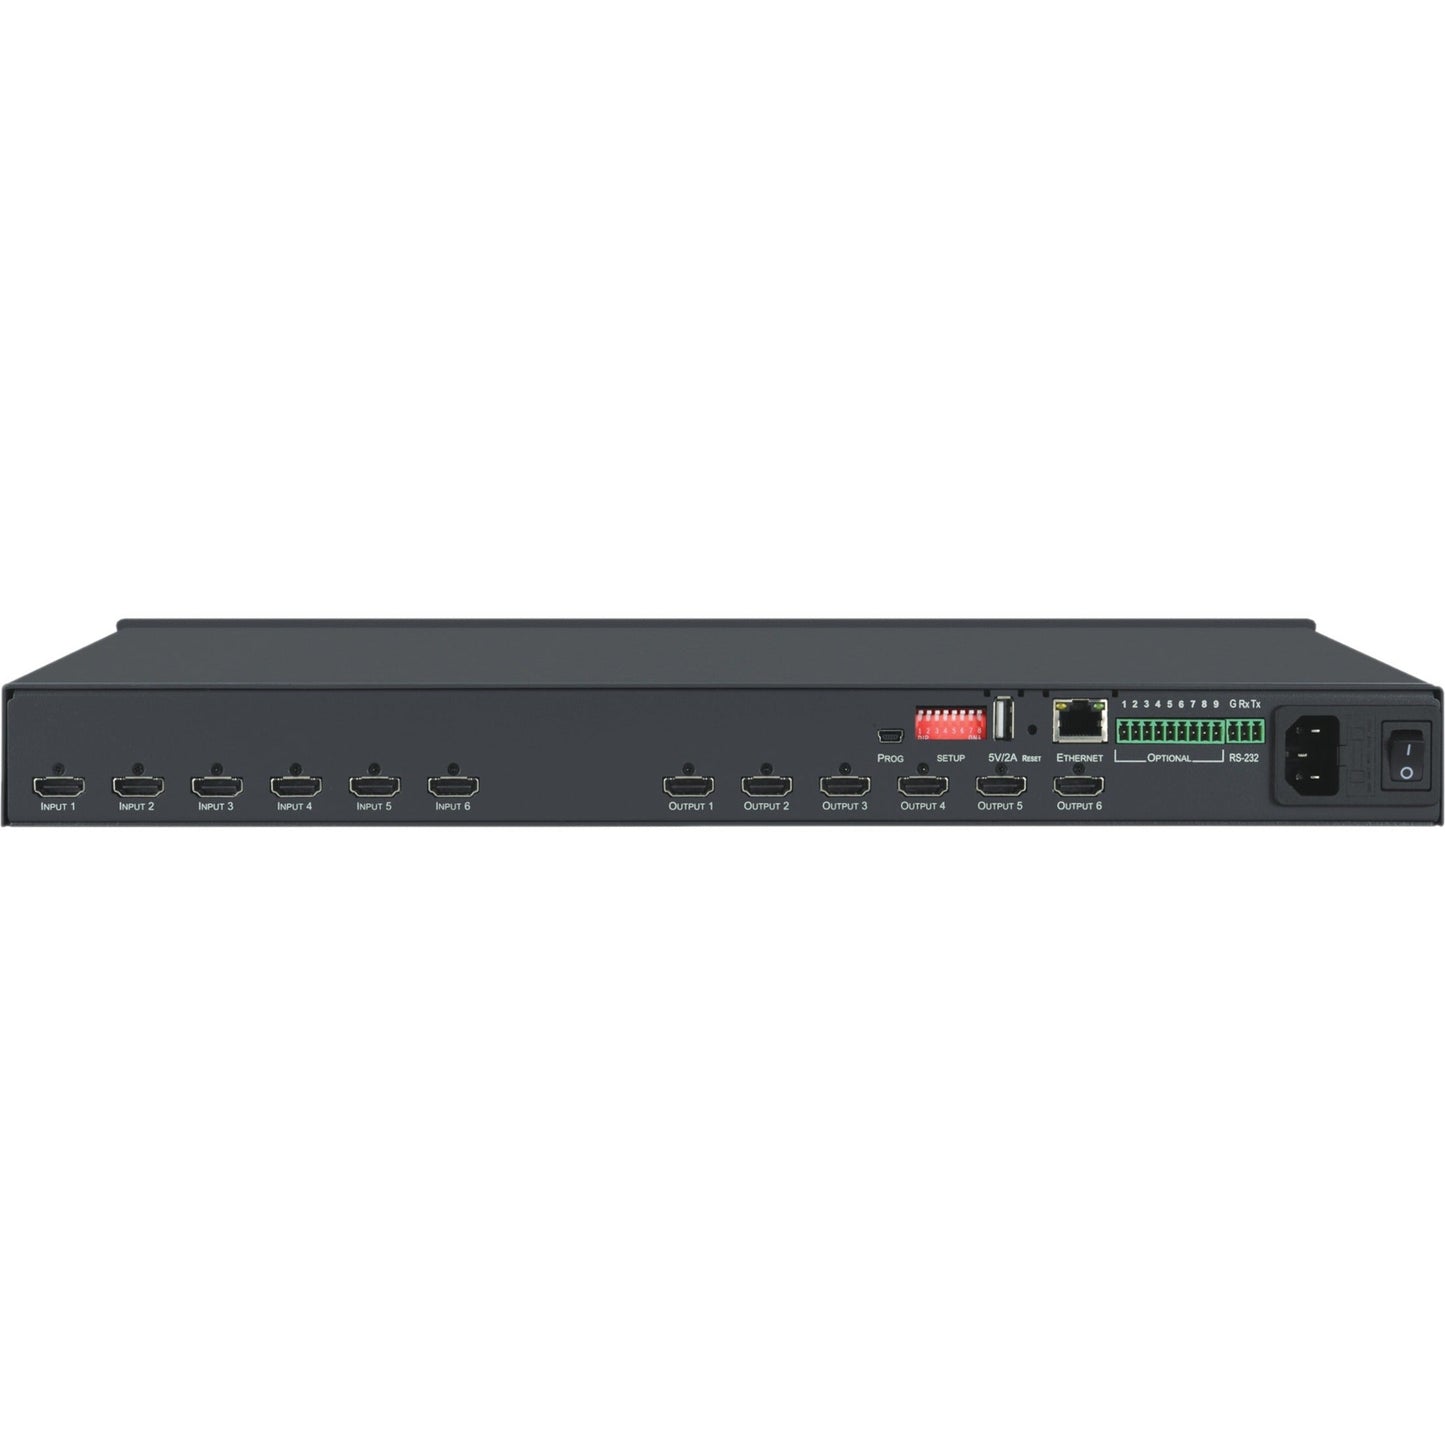 Kramer VS-66H2 6x6 4K HDR HDCP 2.2 Matrix Switcher with Digital Audio Routing